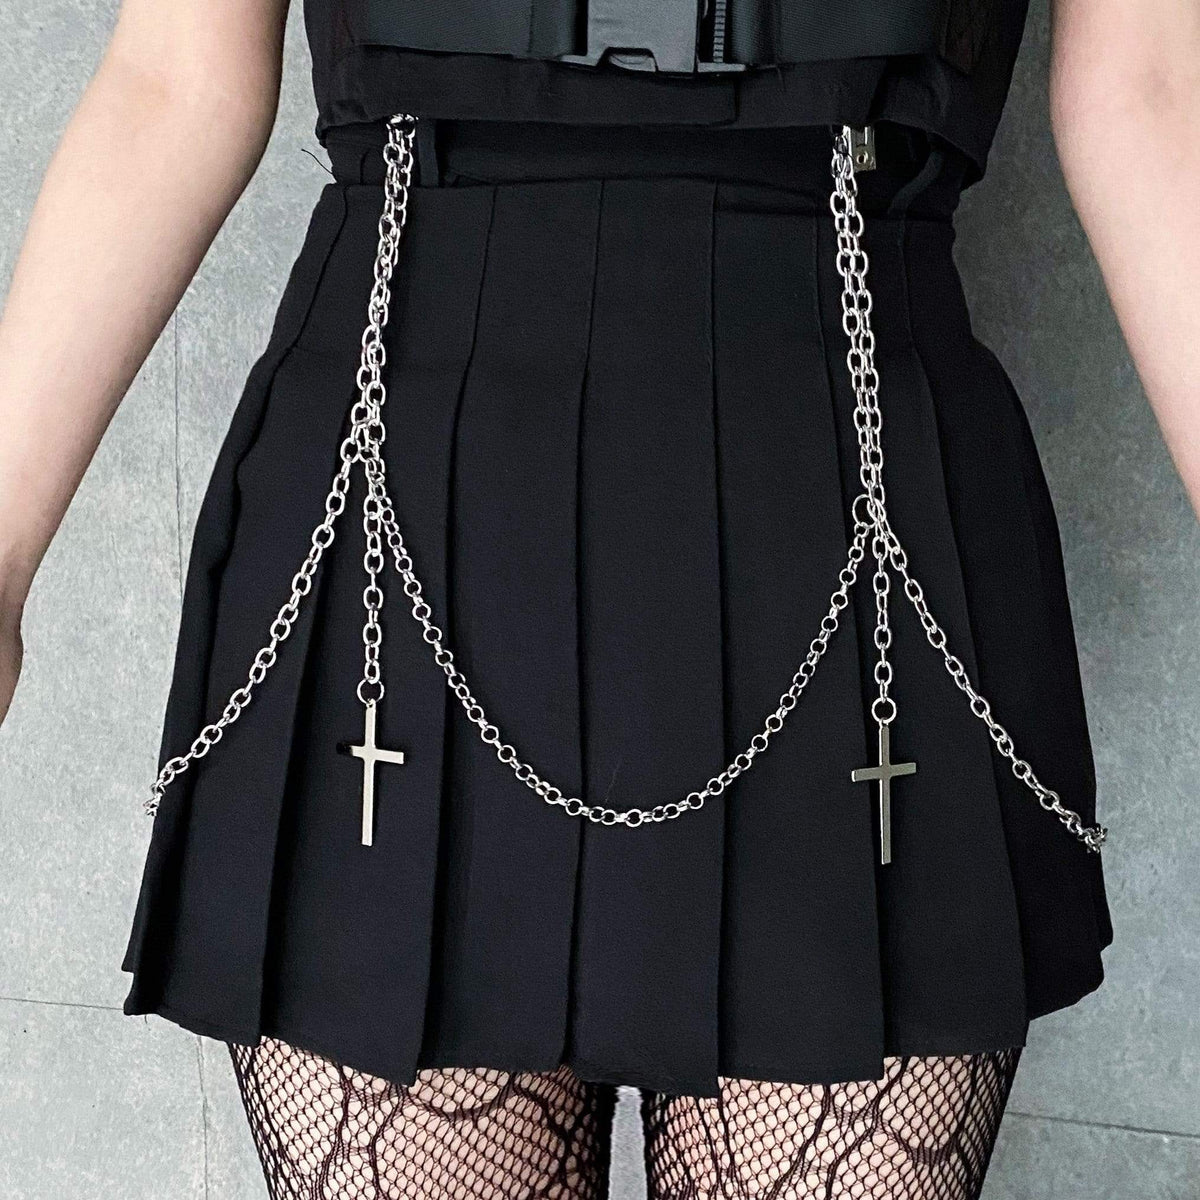 Kobine Faldas plisadas JK de cintura alta Kawaii para mujer con cadena cruzada de metal